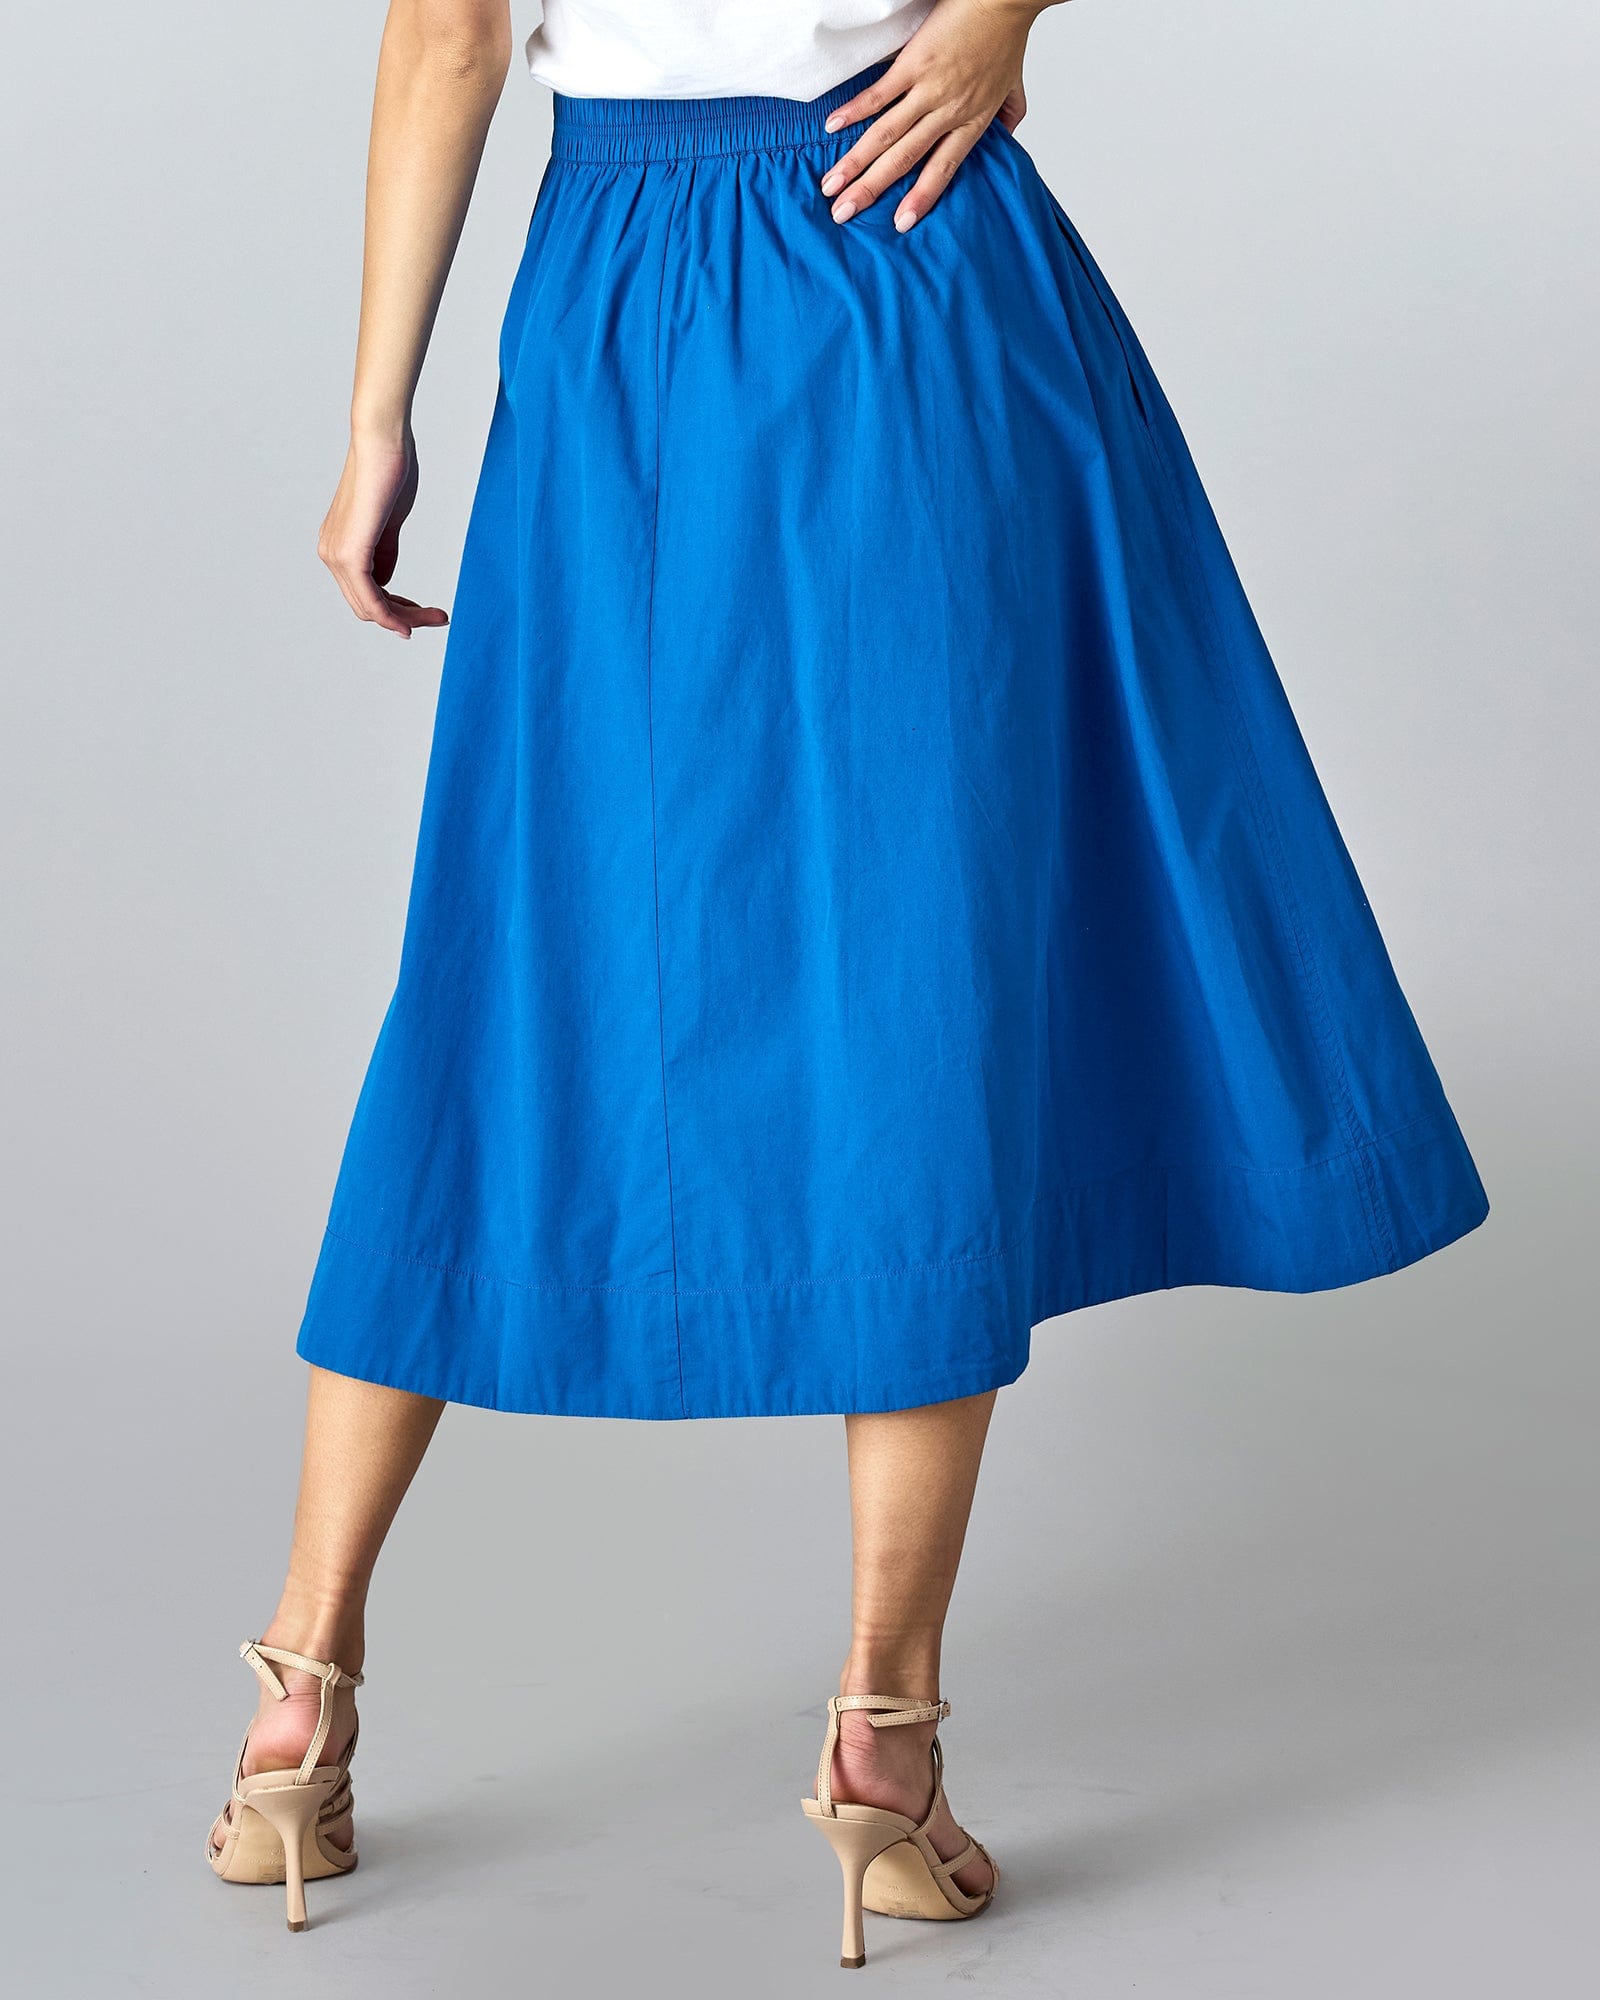 Woman in a blue, midi-length a-line skirt.